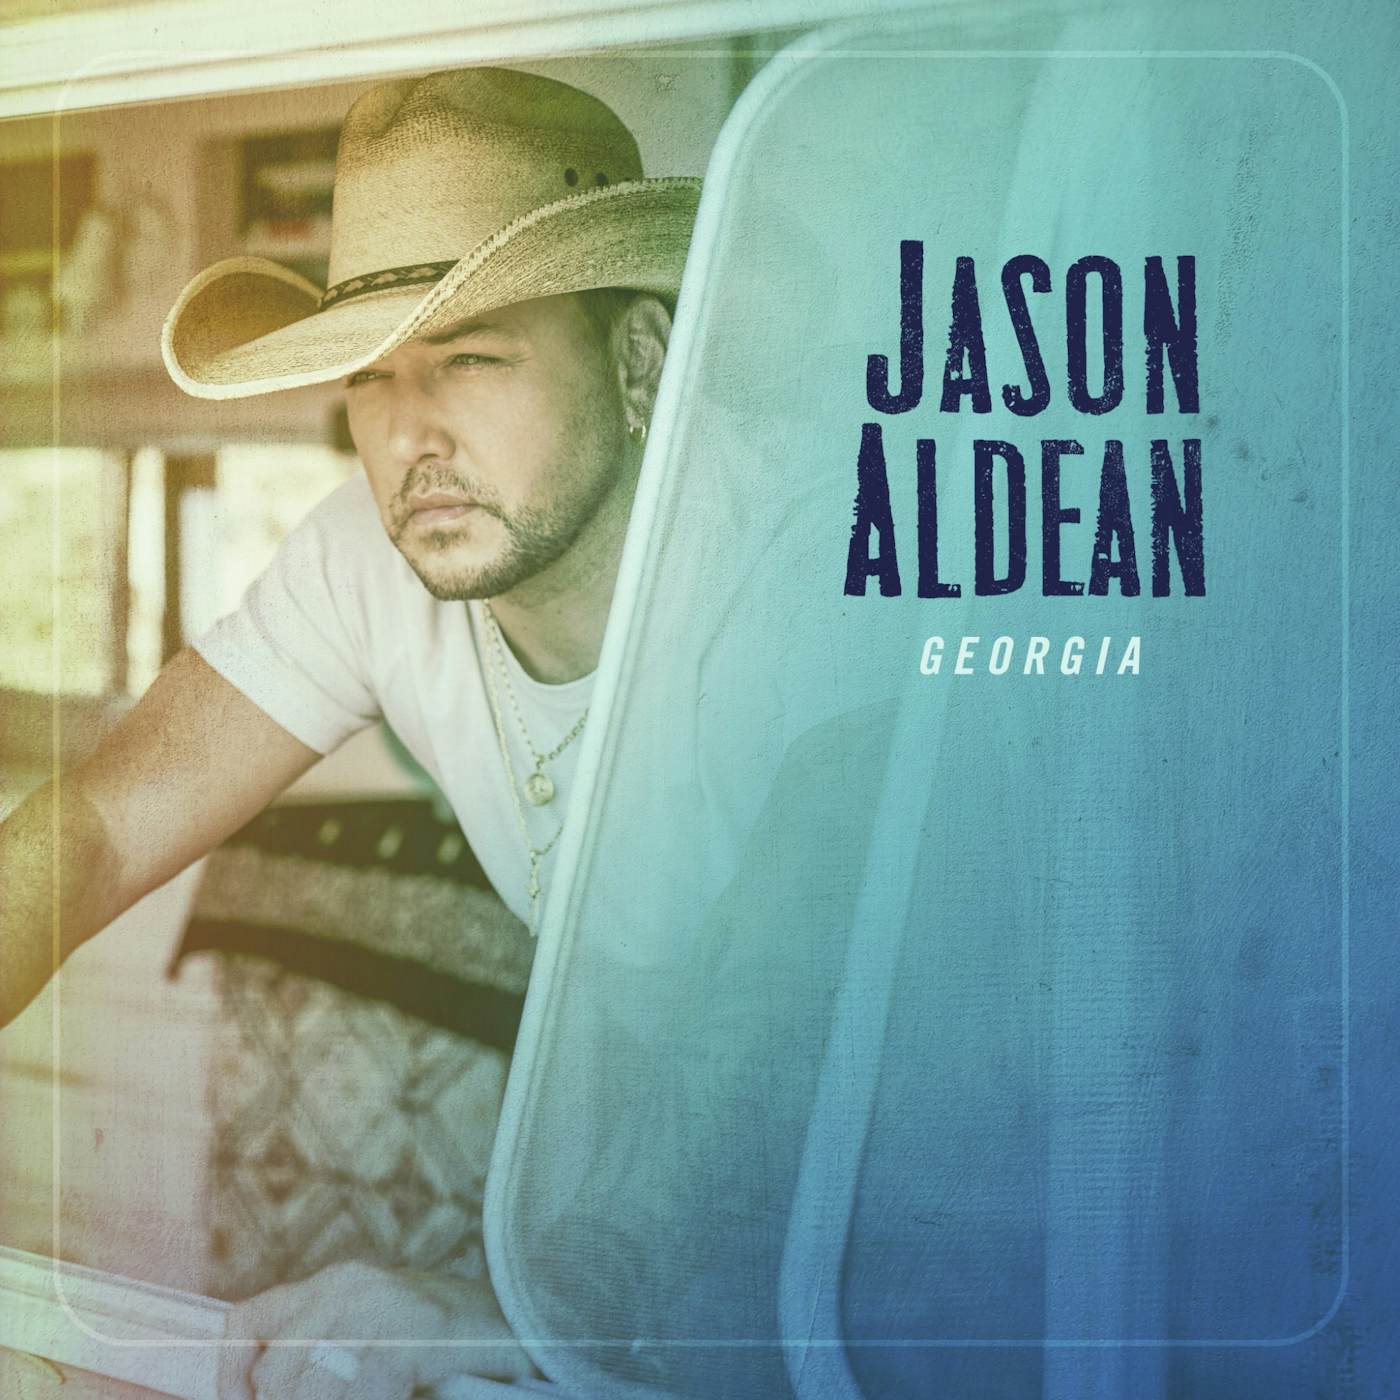 Jason Aldean Georgia CD